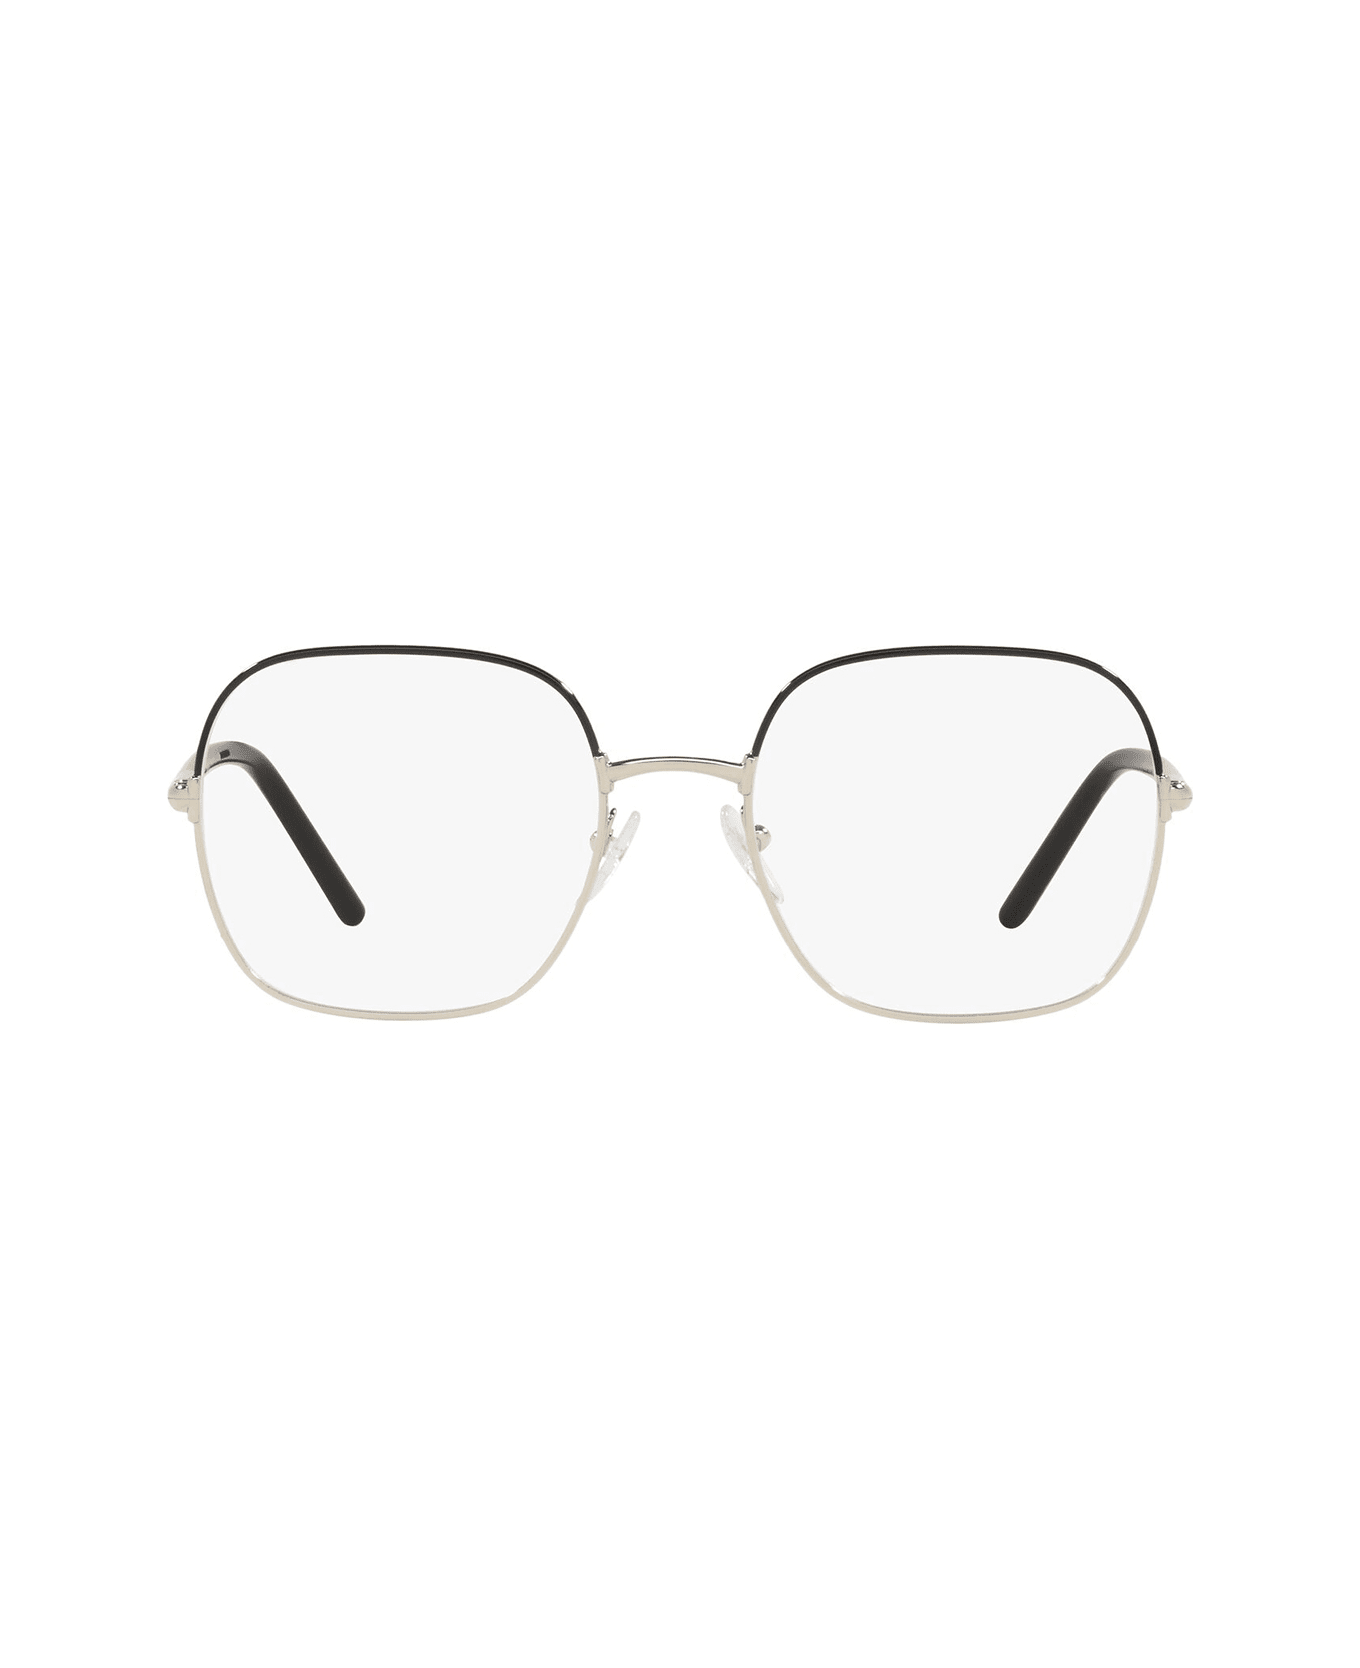 Prada Eyewear Pr 56wv Black / Pale Gold Glasses - Black / Pale Gold